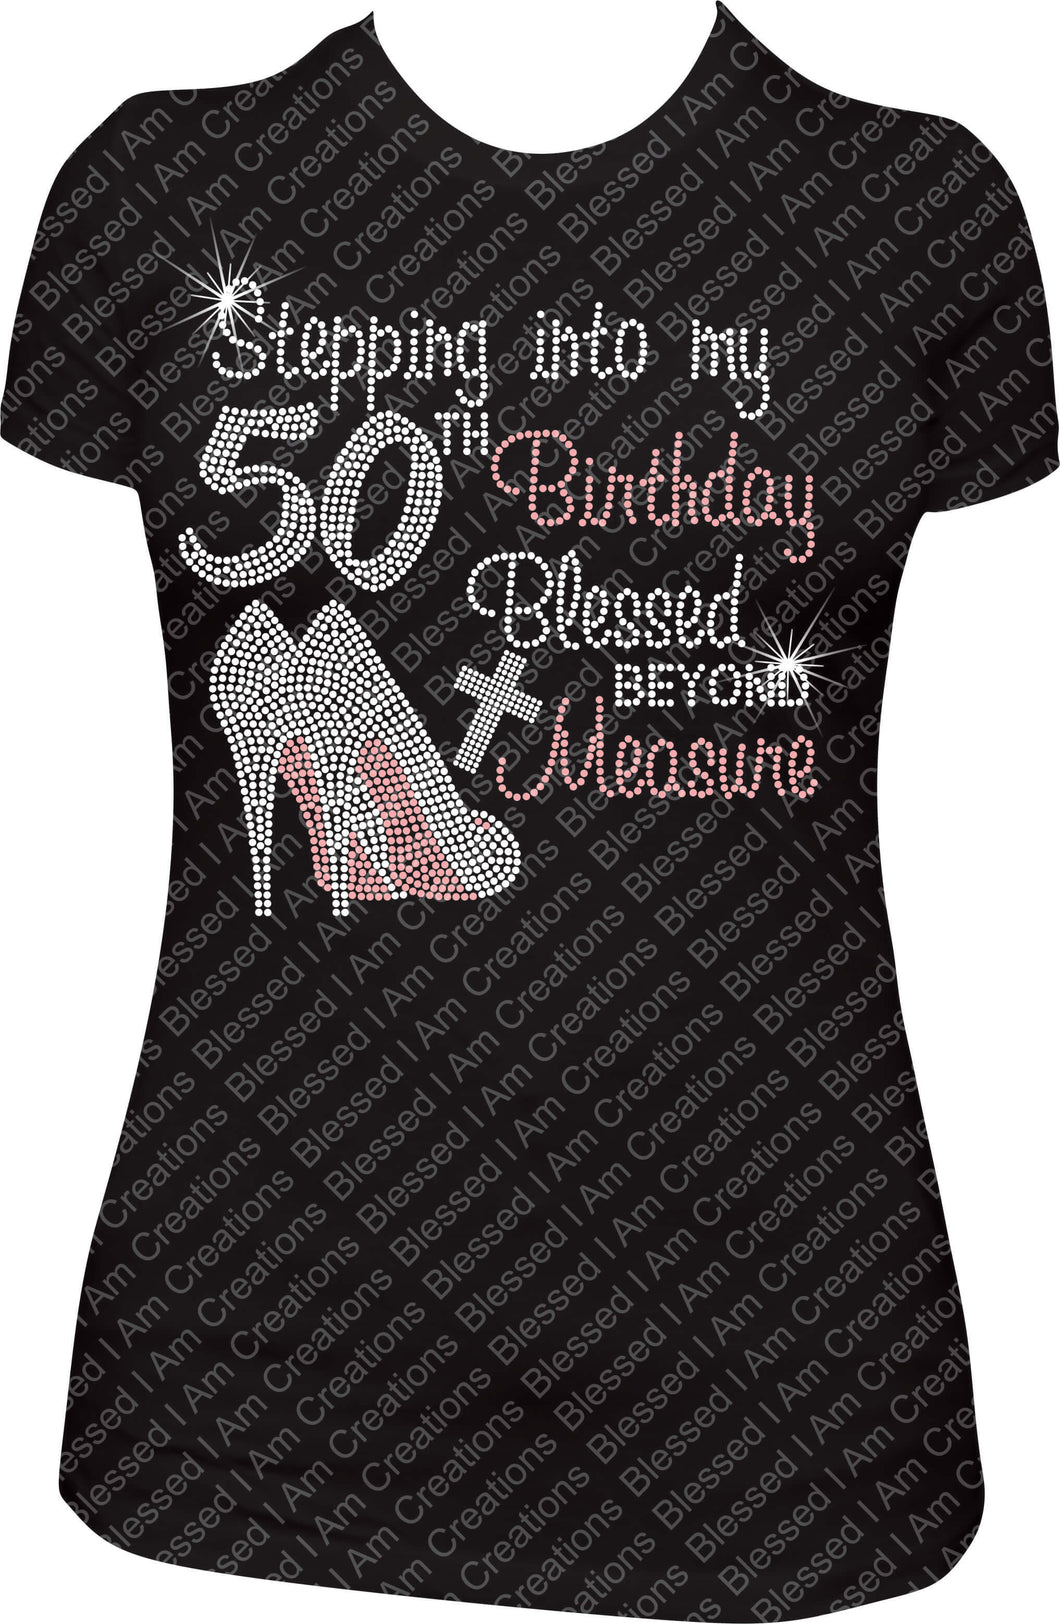 Stepping into my 50th Birthday Blessed Beyond Measure Rhinestone Birthday Shirt